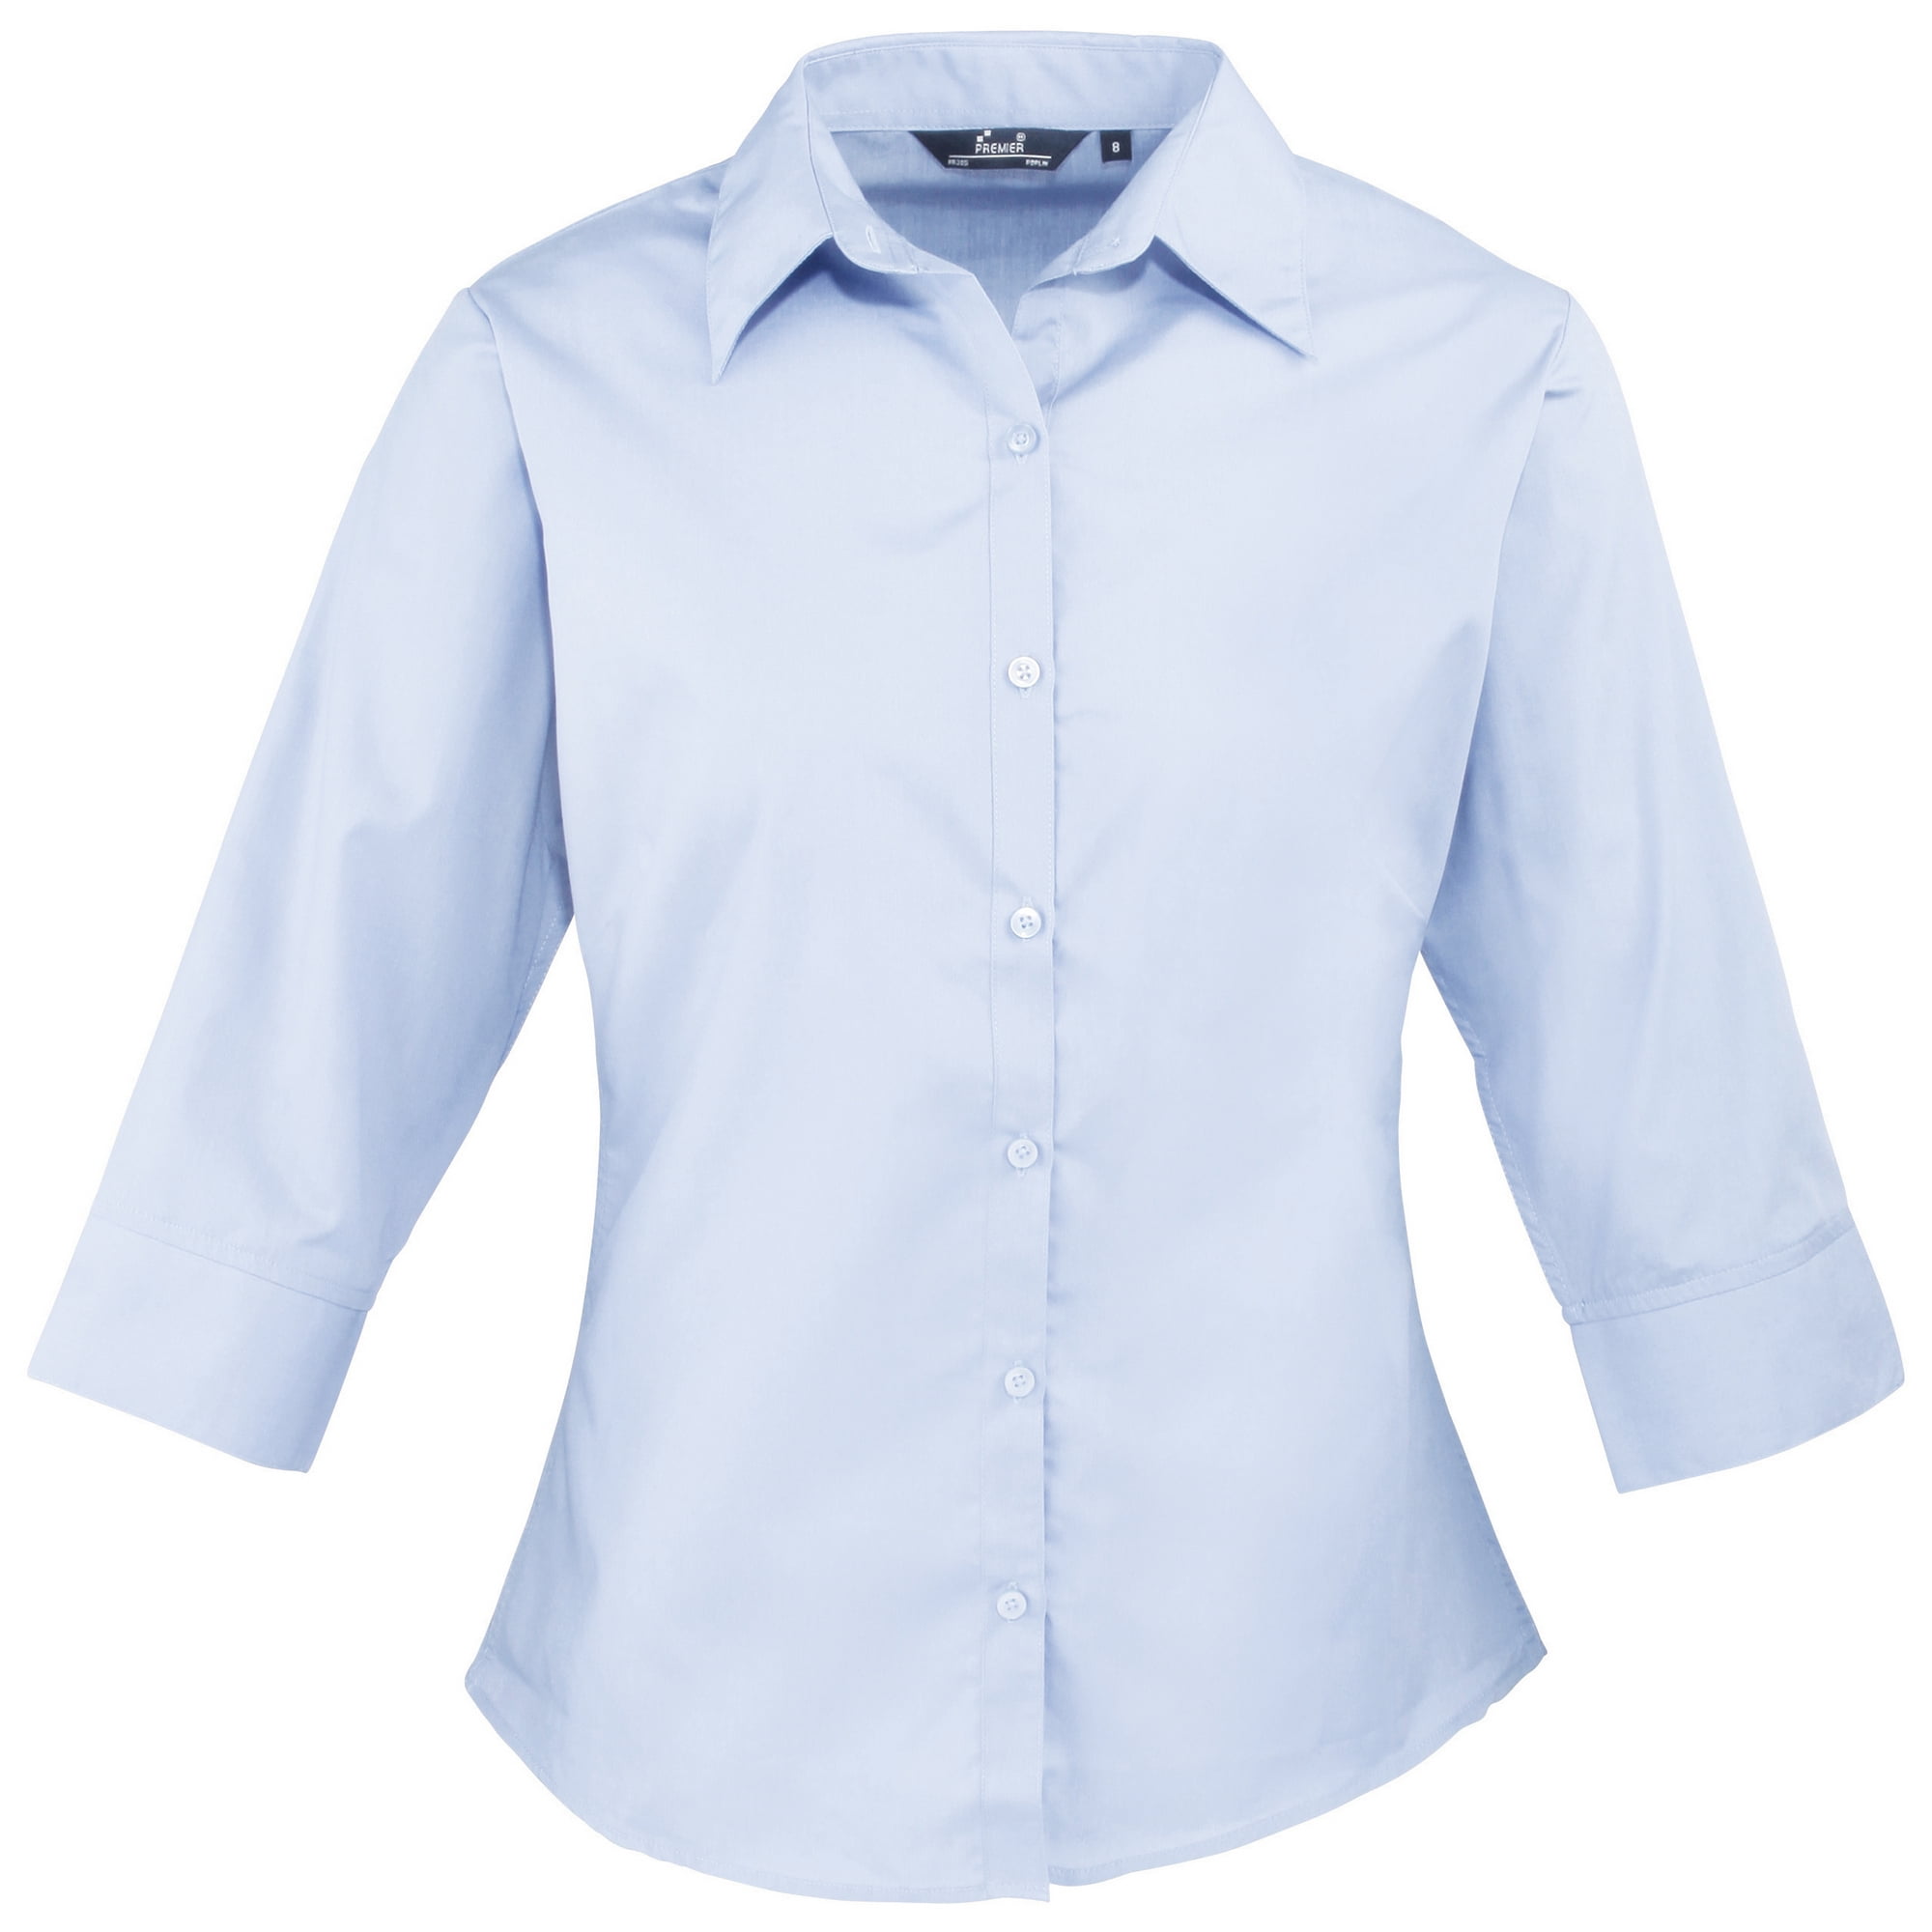 Ladies Women Premier 3/4 Sleeve Poplin Easy Care Fitted Blouse Shirt 